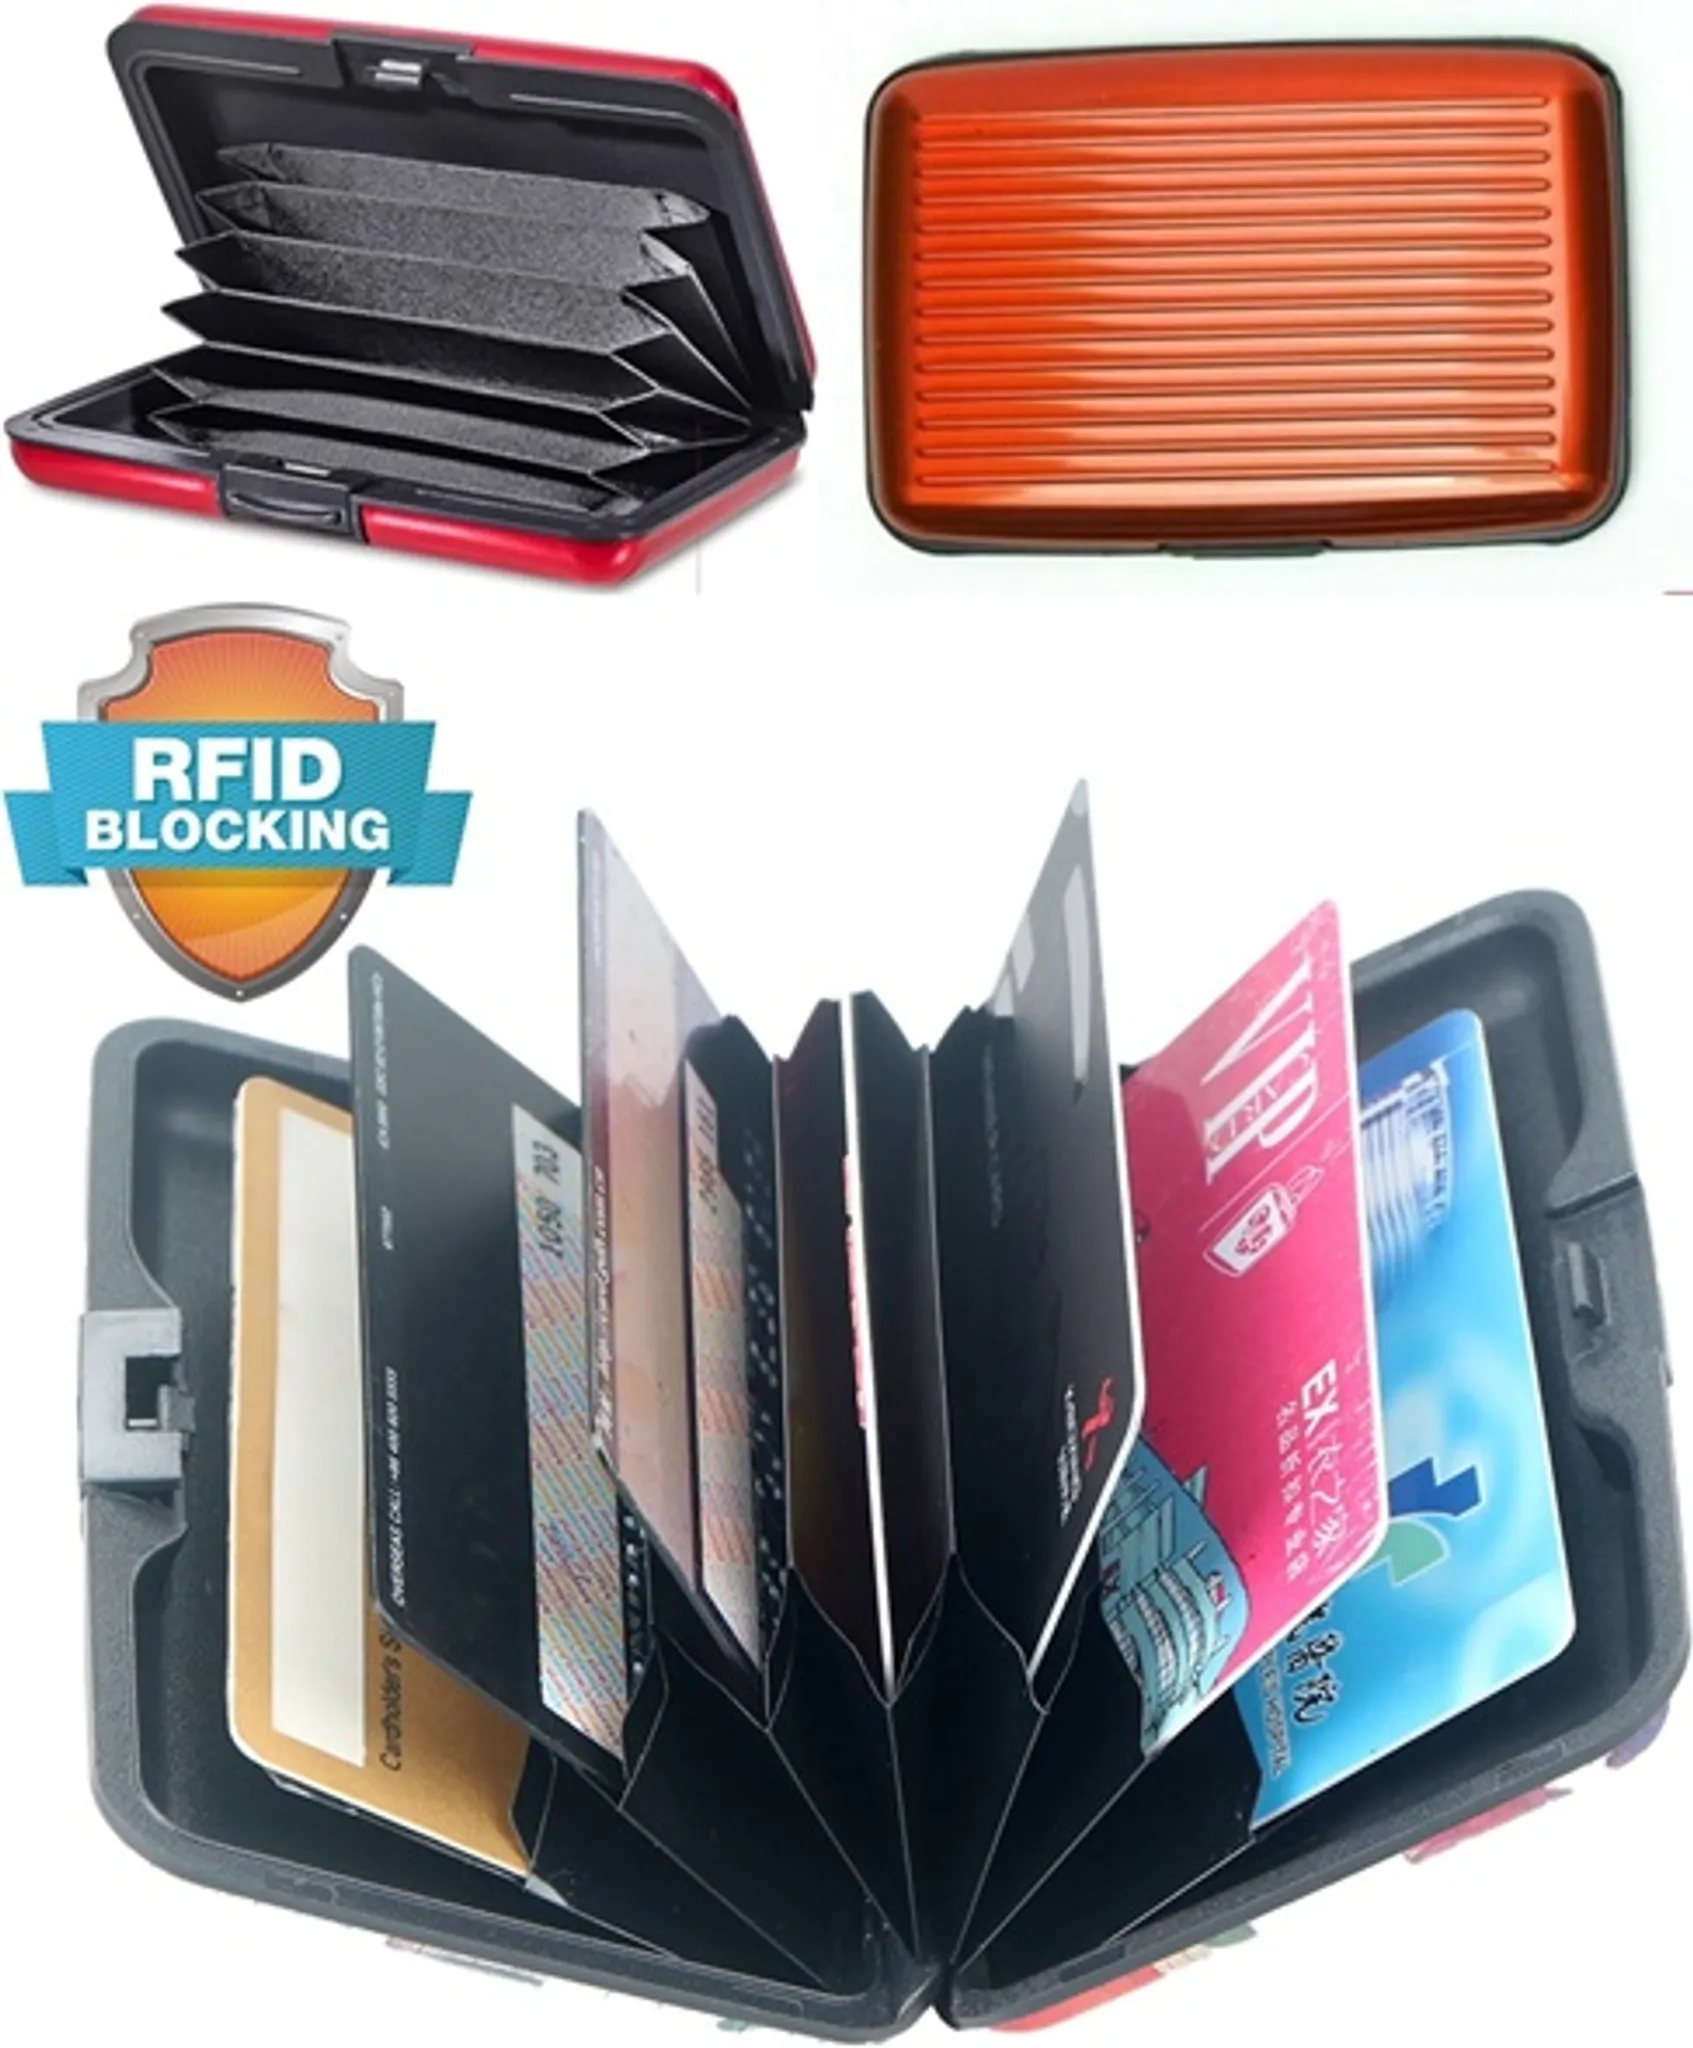 Xcase Kreditkartenetui: Edles RFID-Kartenetui aus Aluminium